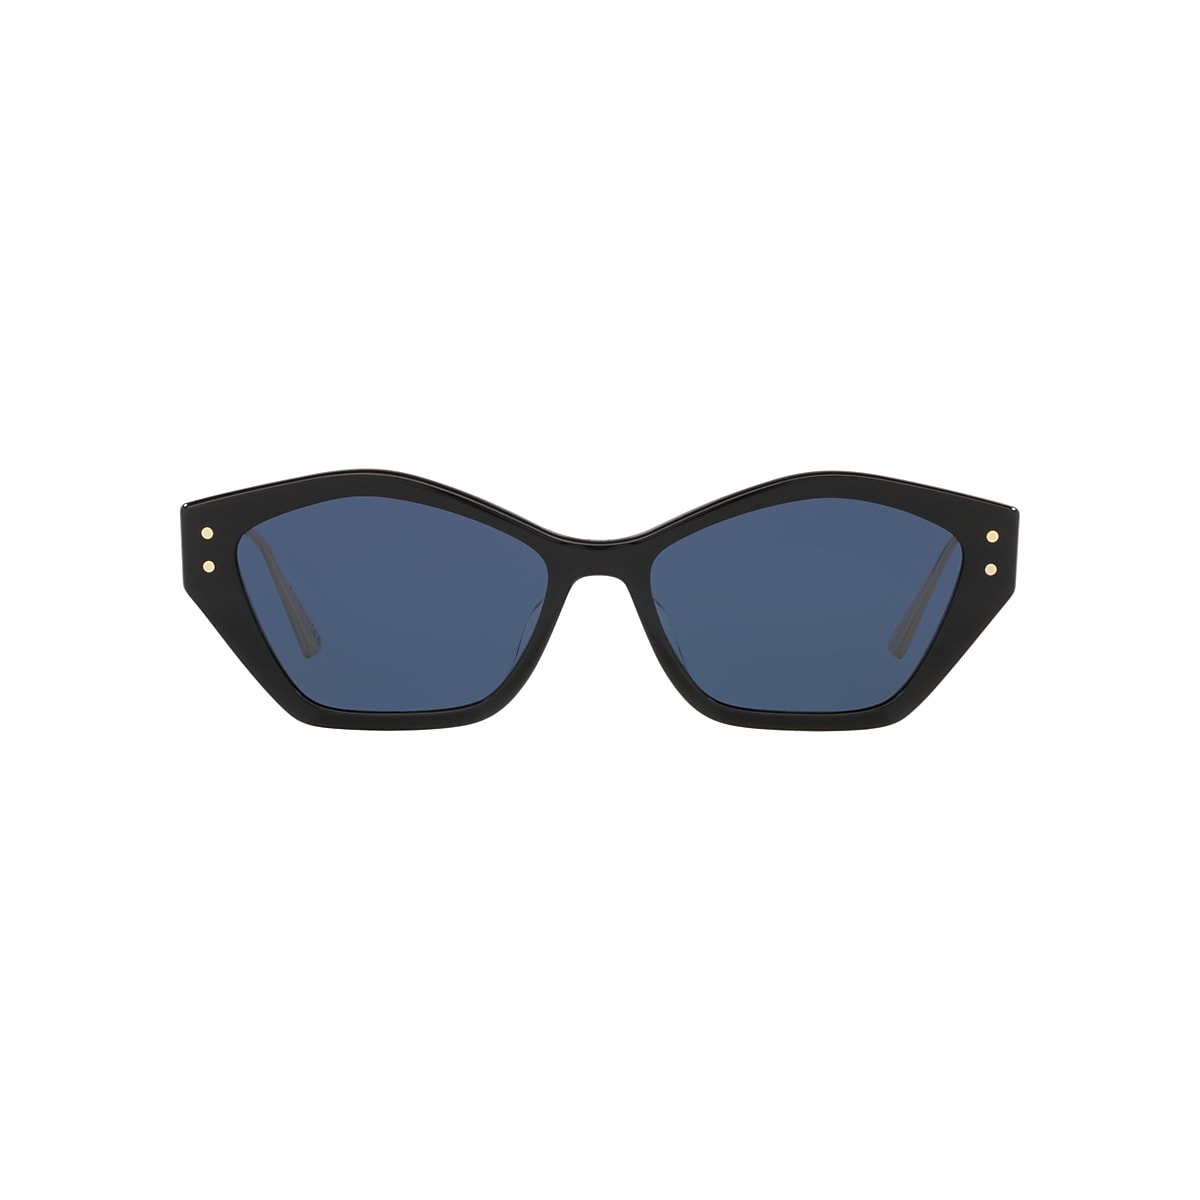 DIOR MissDior S1U Black Shiny - Woman Luxury Sunglasses, Blue Lens